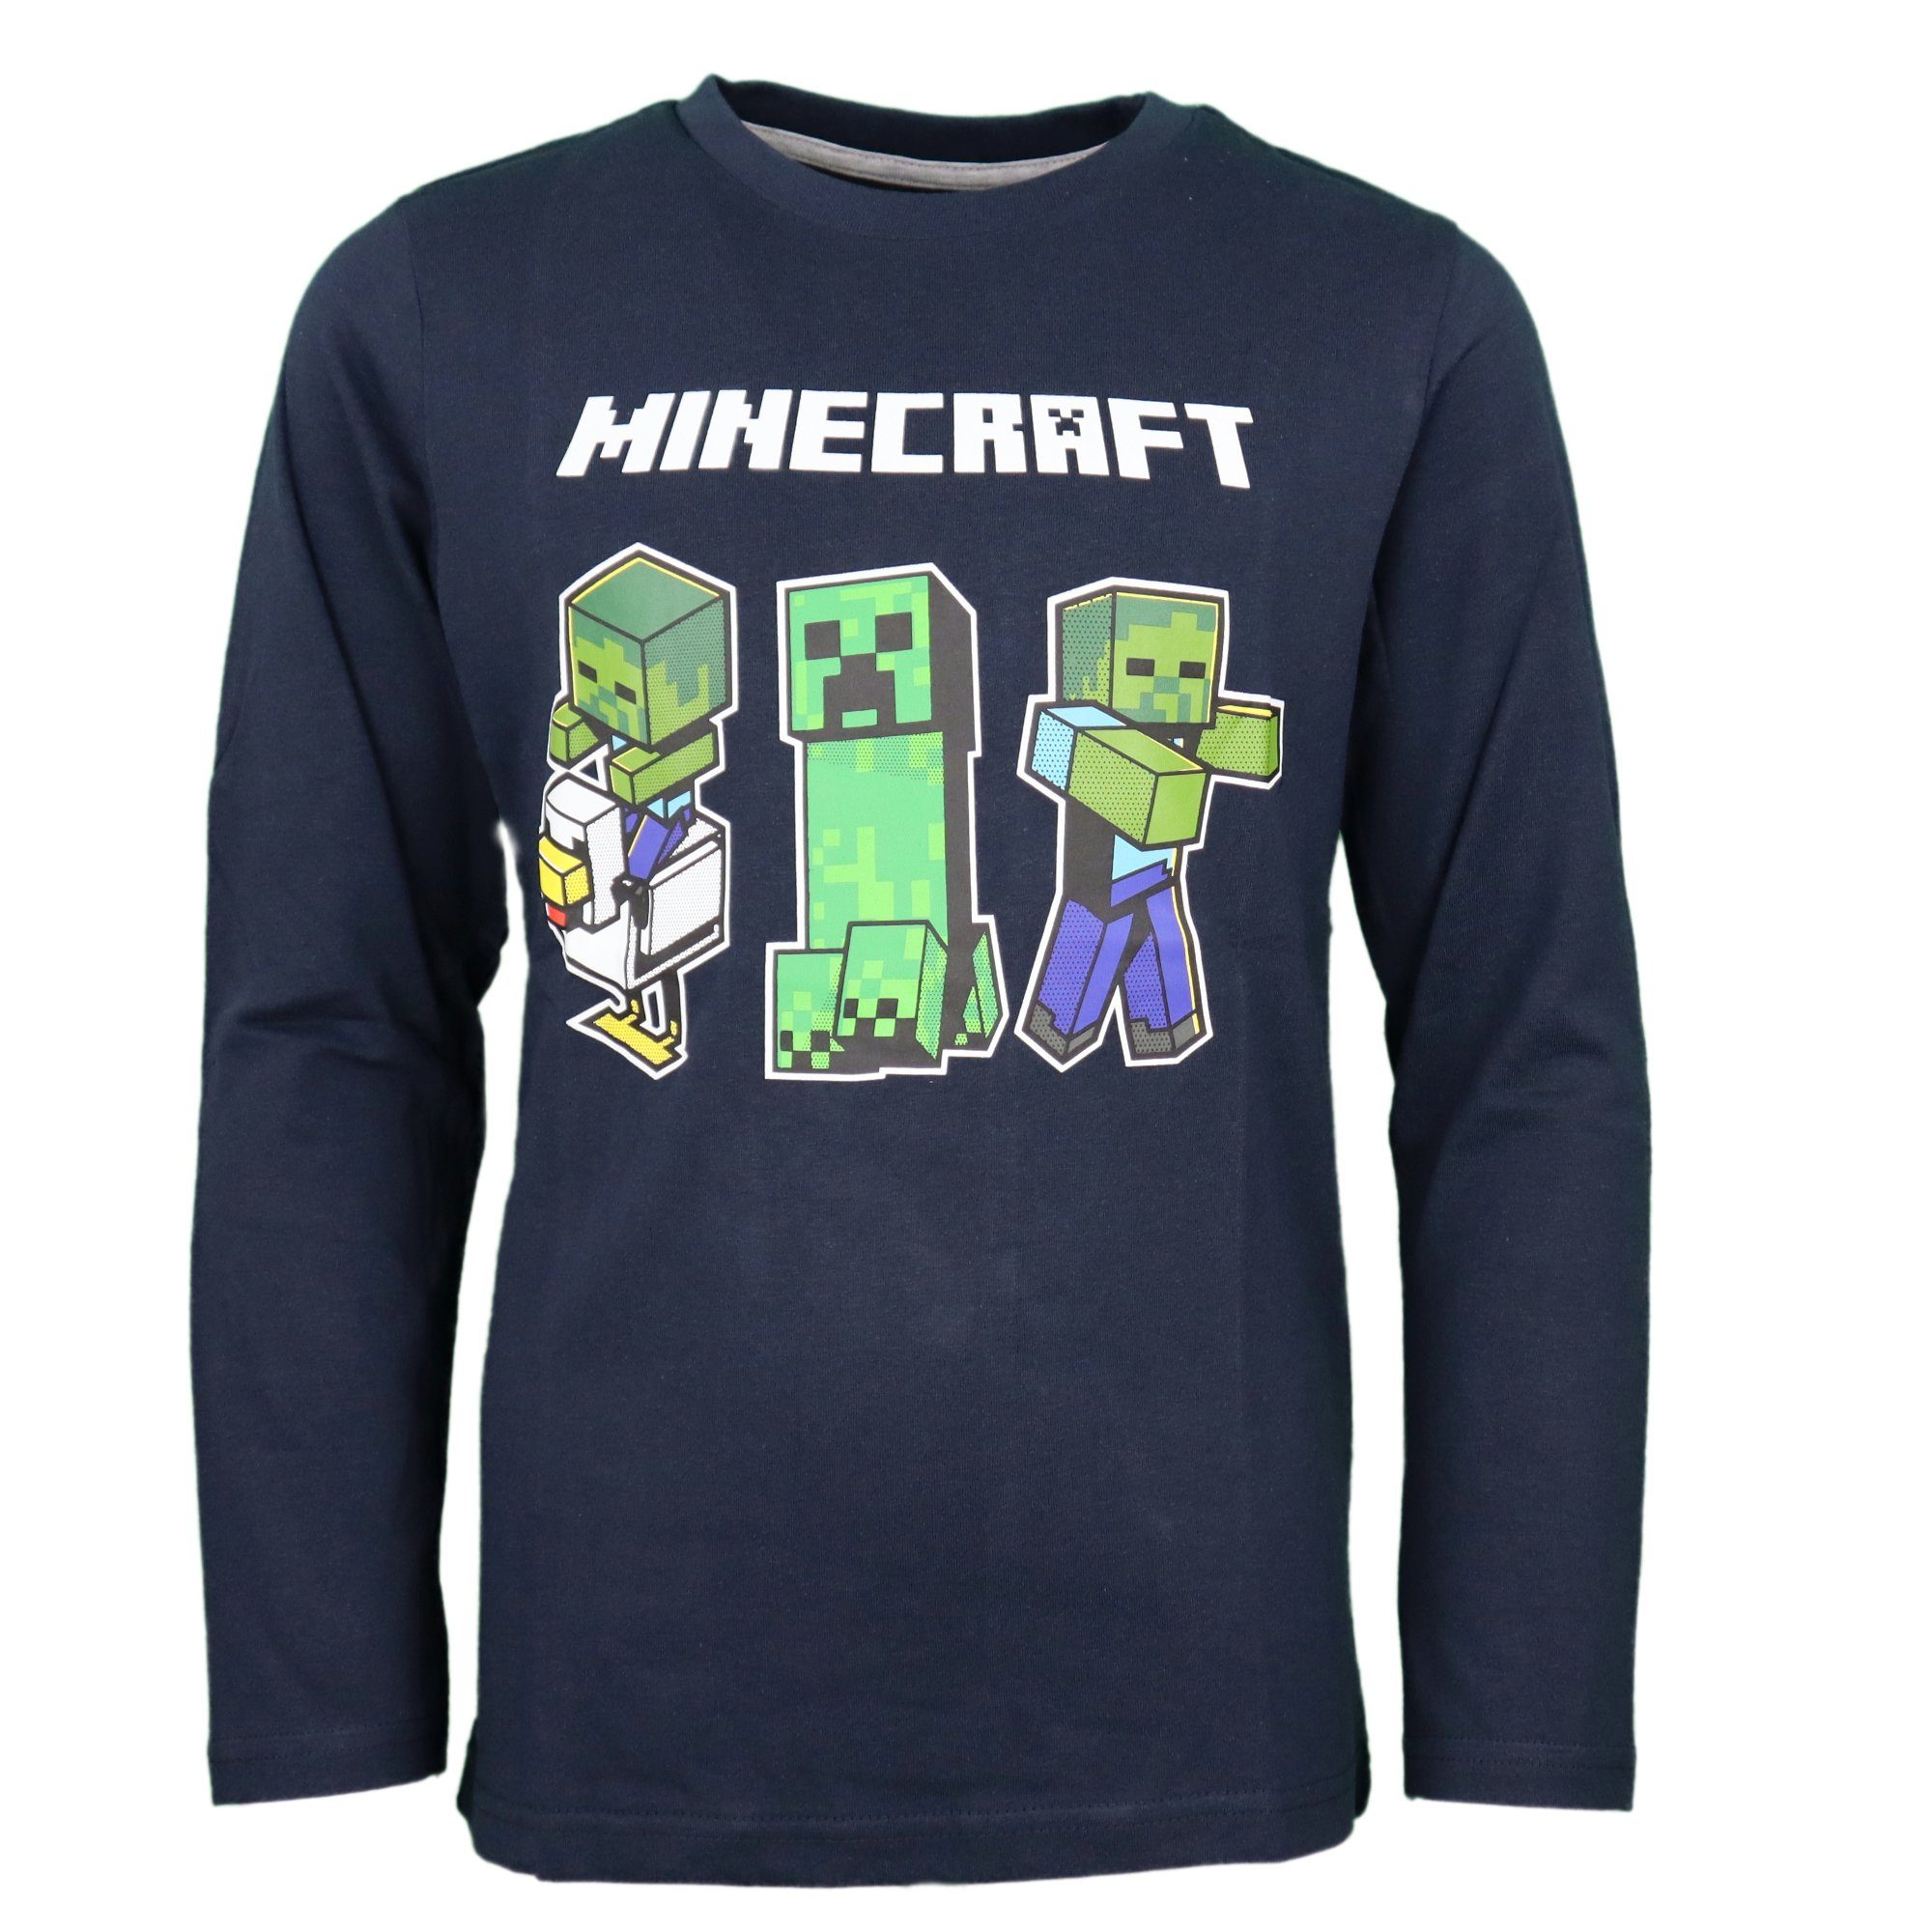 bis Creeper 116 Langarmshirt 100% Kinder Gr. 152, Baumwolle Shirt Minecraft